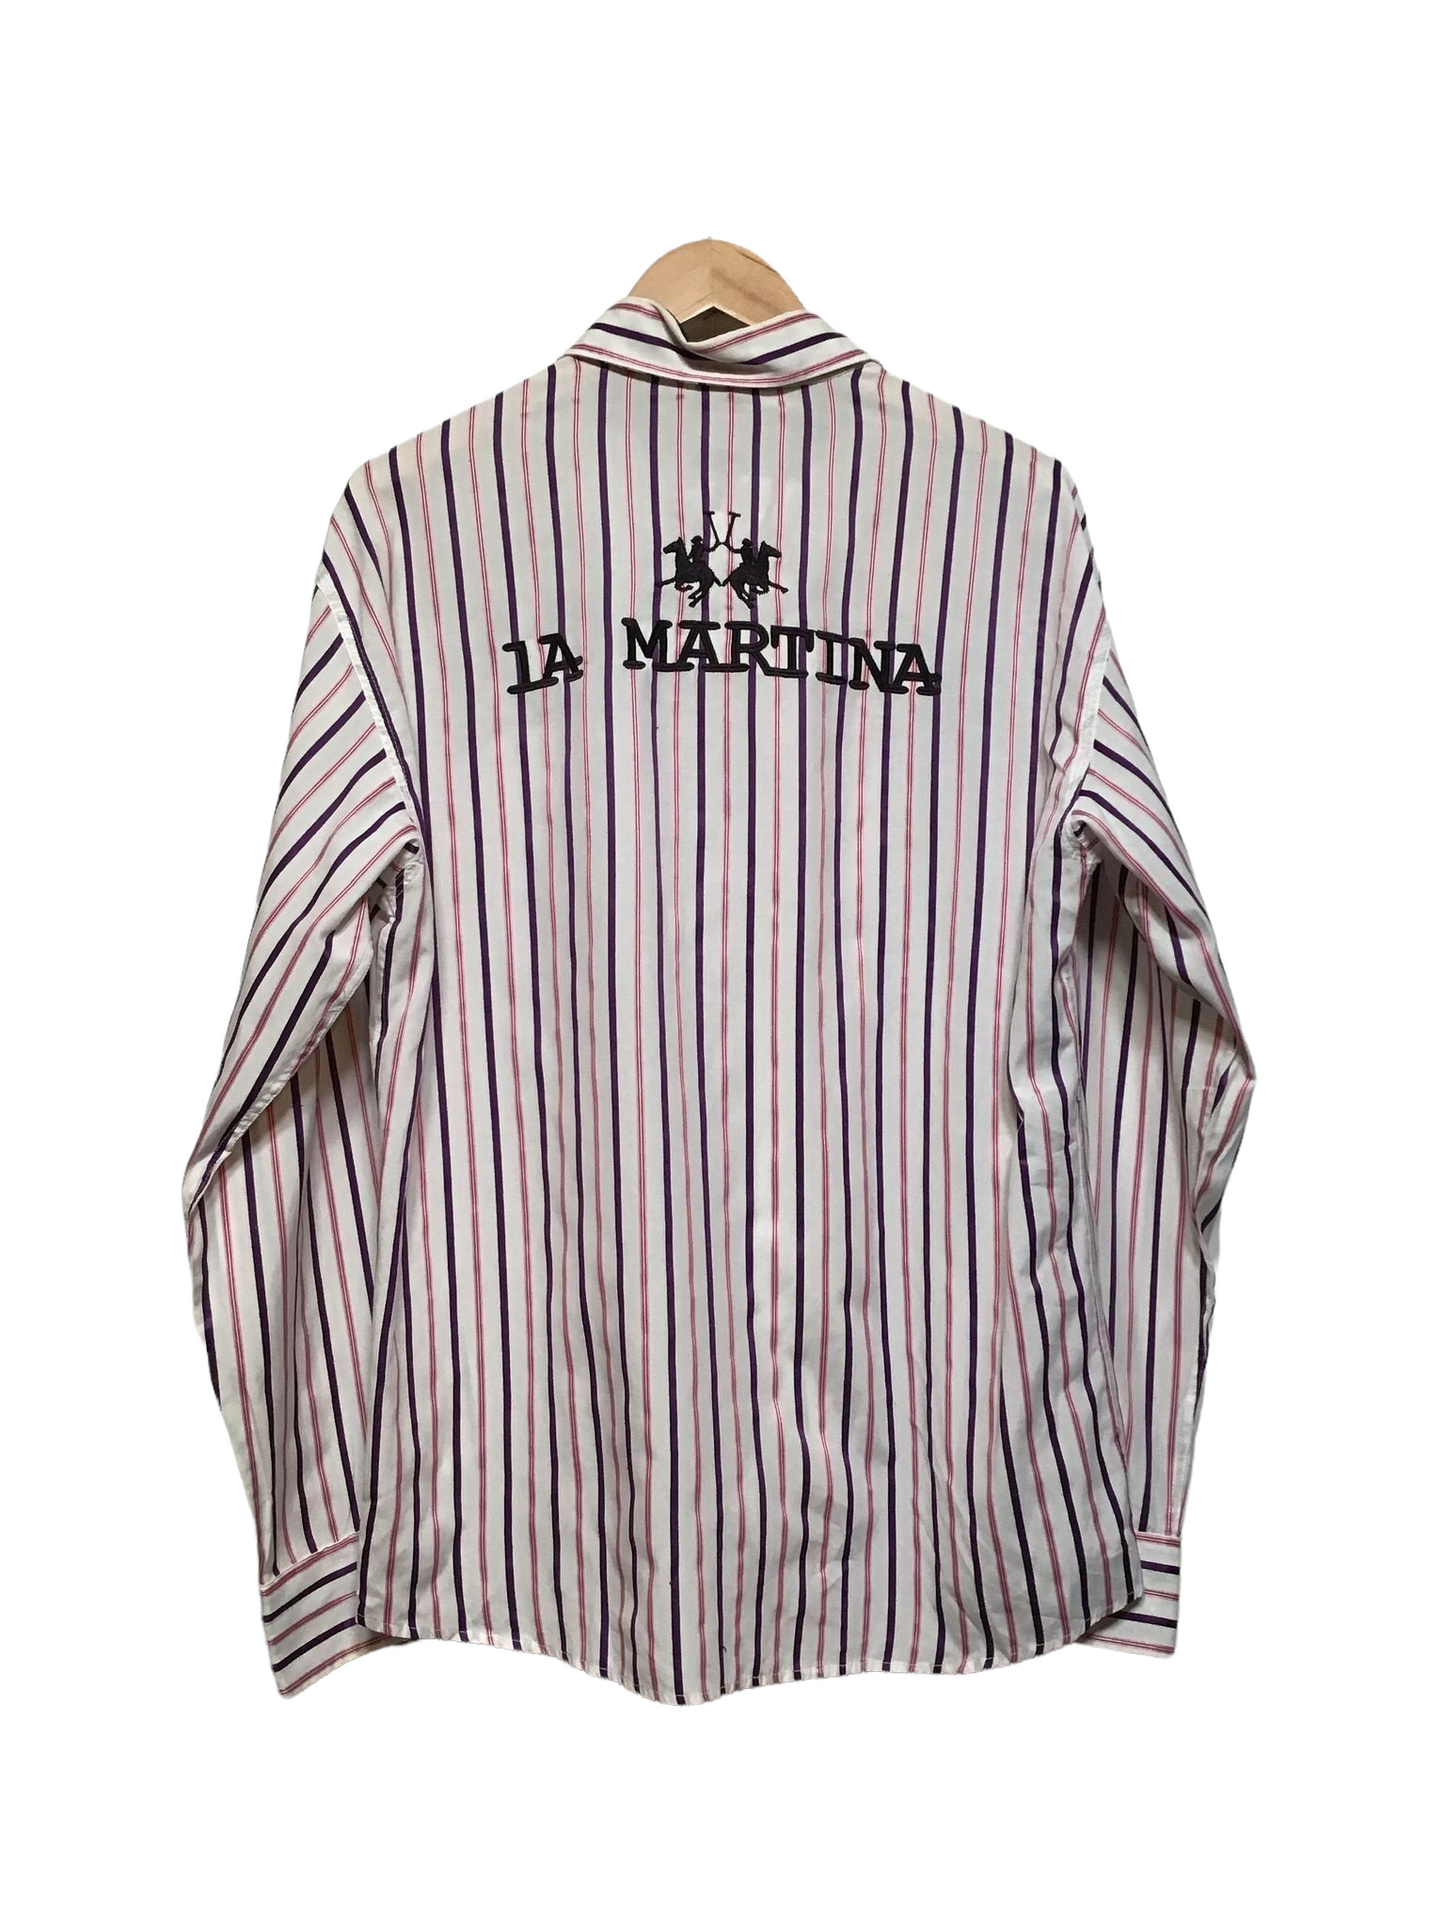 La Martina Pinstriped Shirt (Size L)